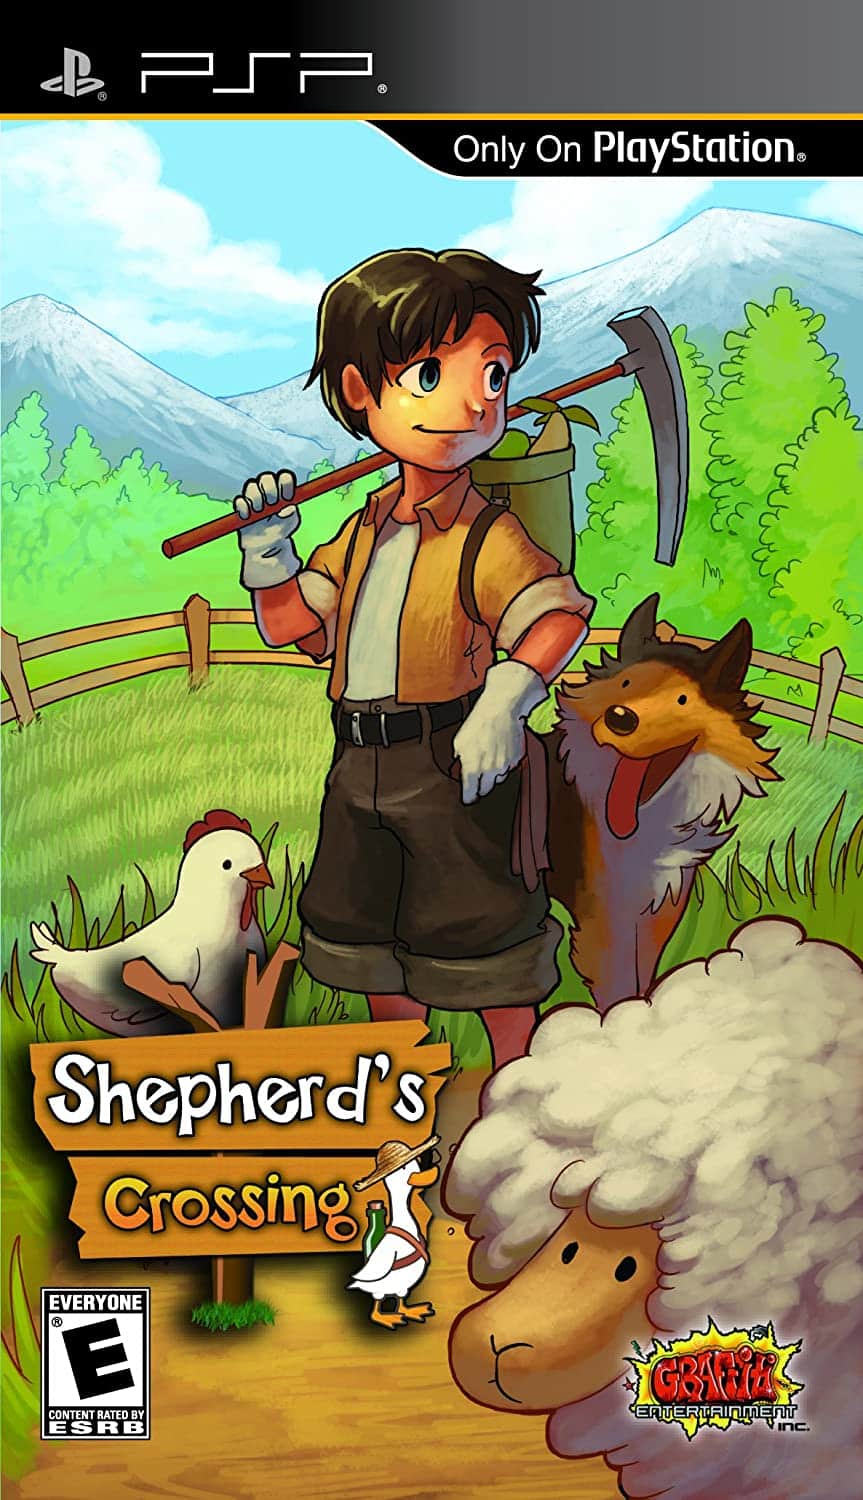 Shepherd’s Crossing player count stats